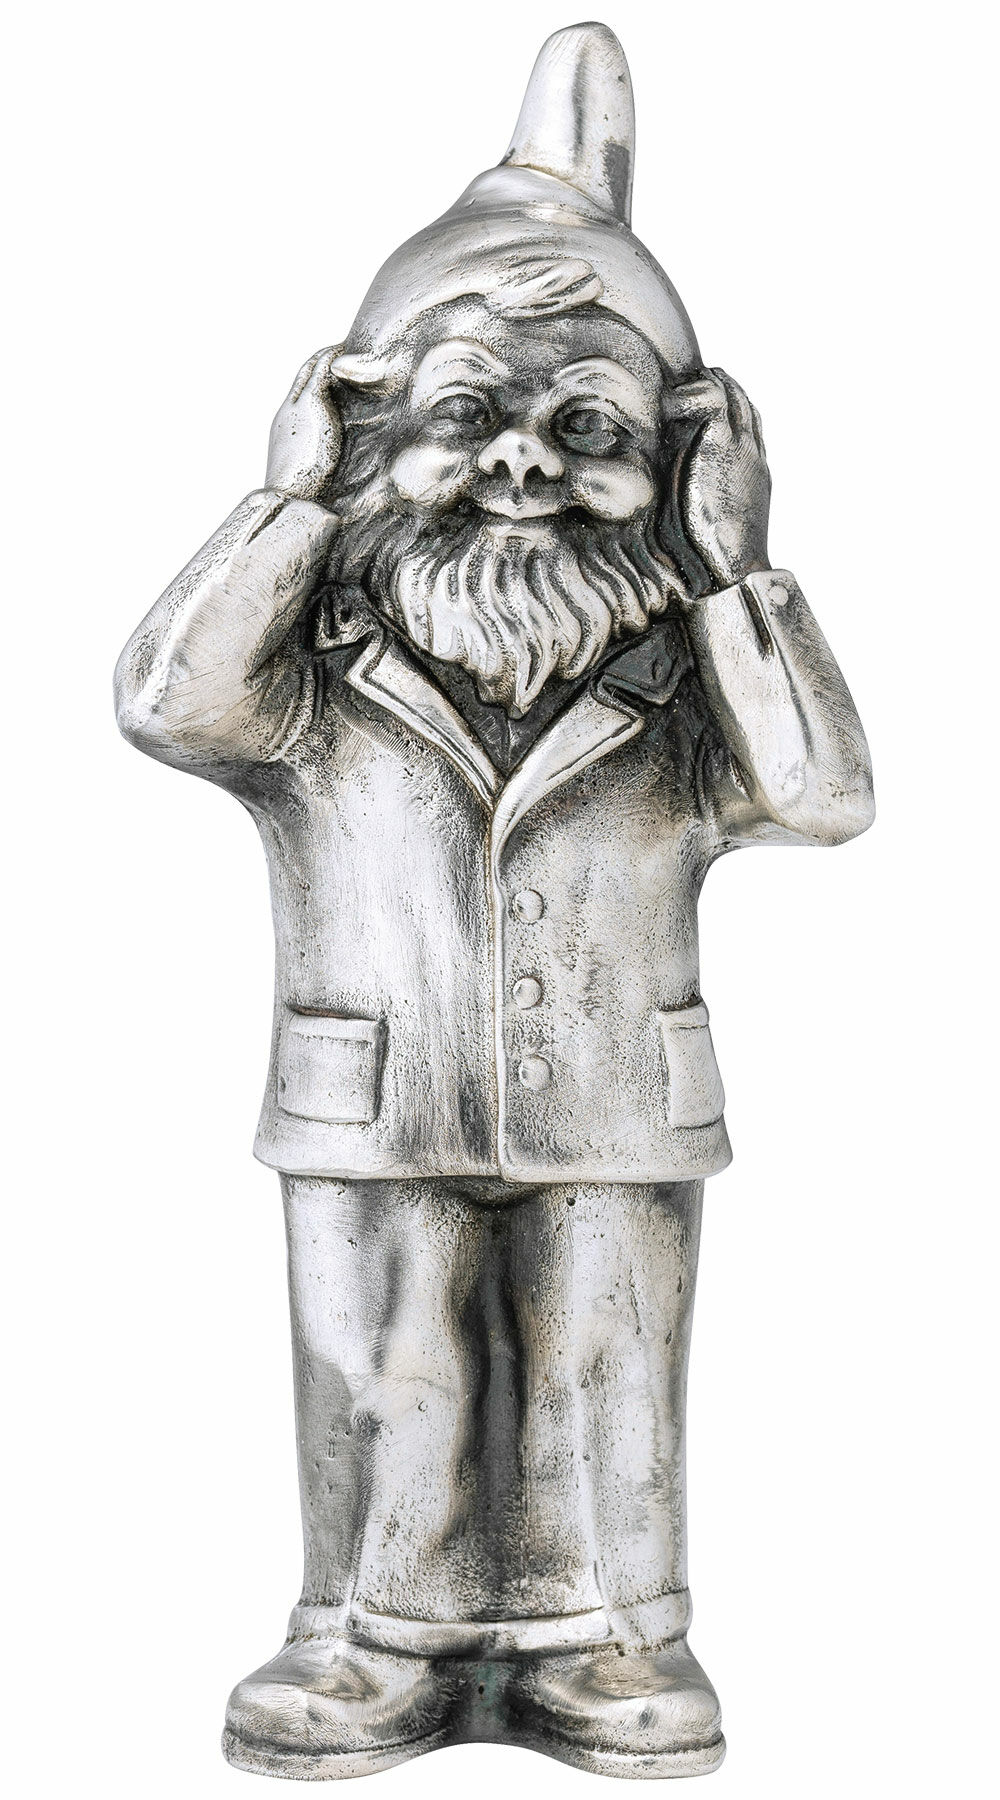 Sculpture "Bearer of Secrets - Hear Nothing", silver-plated version by Ottmar Hörl